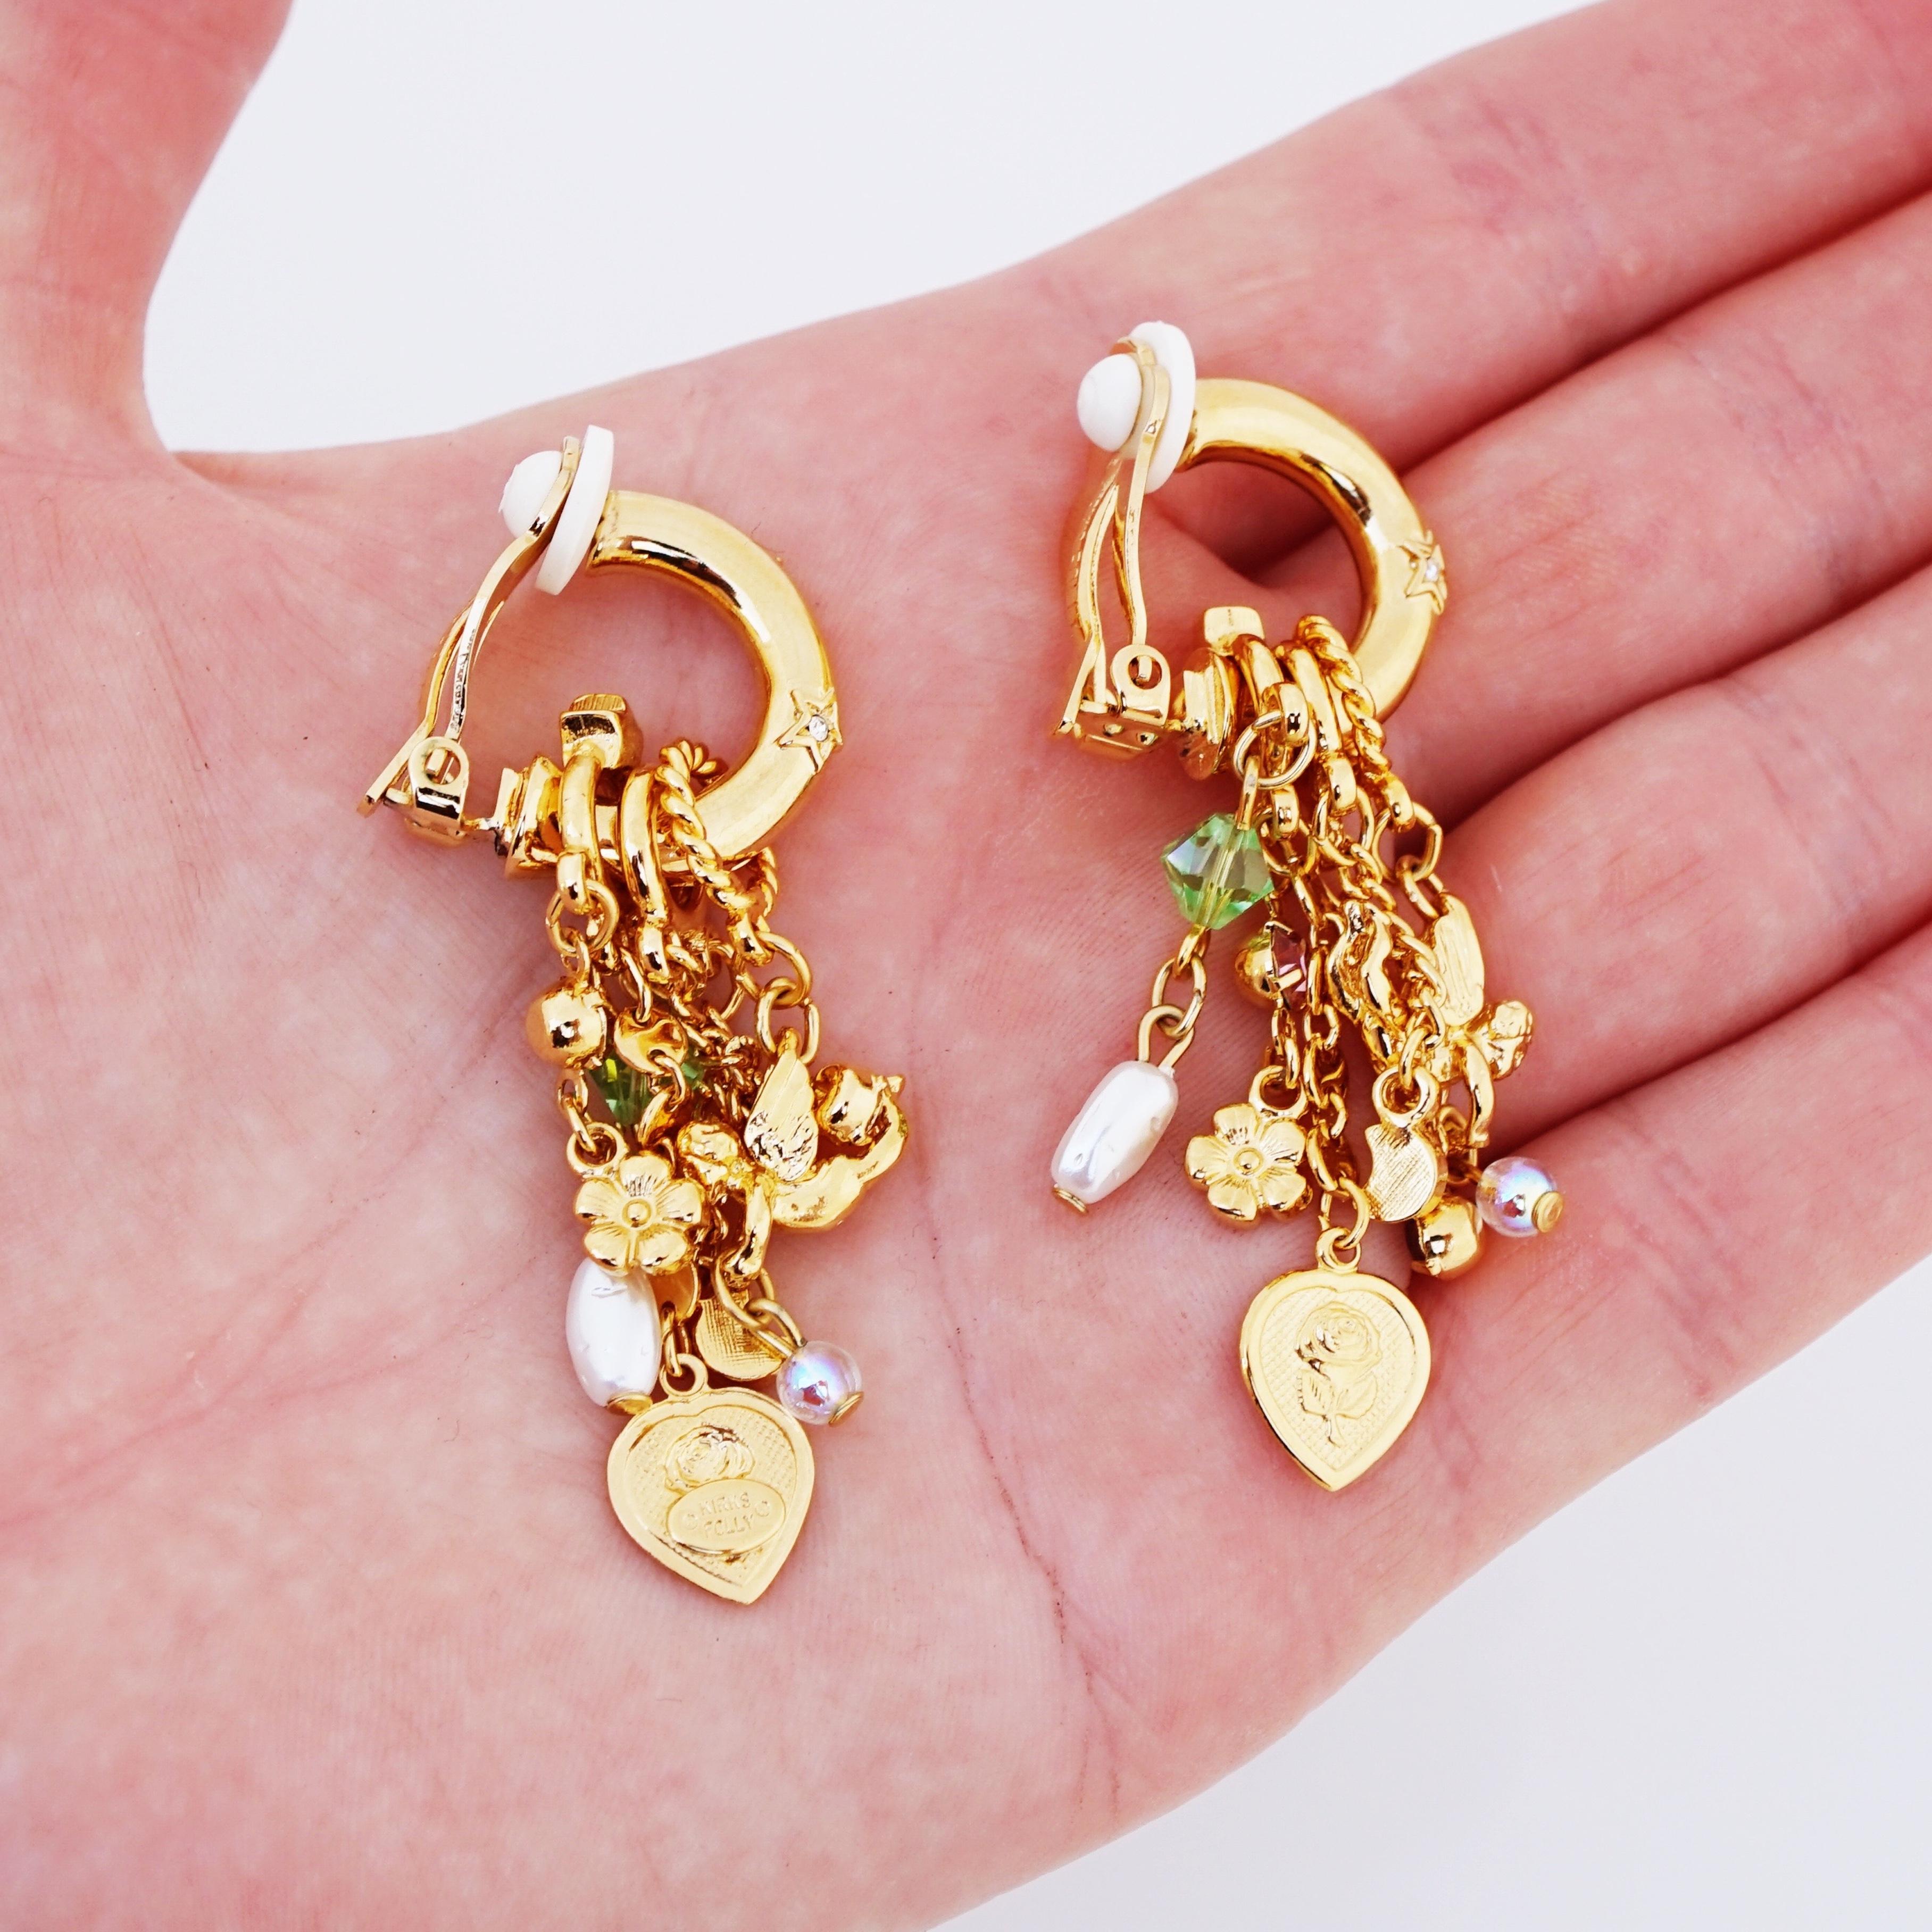 Women's Gold Hoop Earrings With Interchangeable Charm Dangles By Kirks Folly, 1980s For Sale